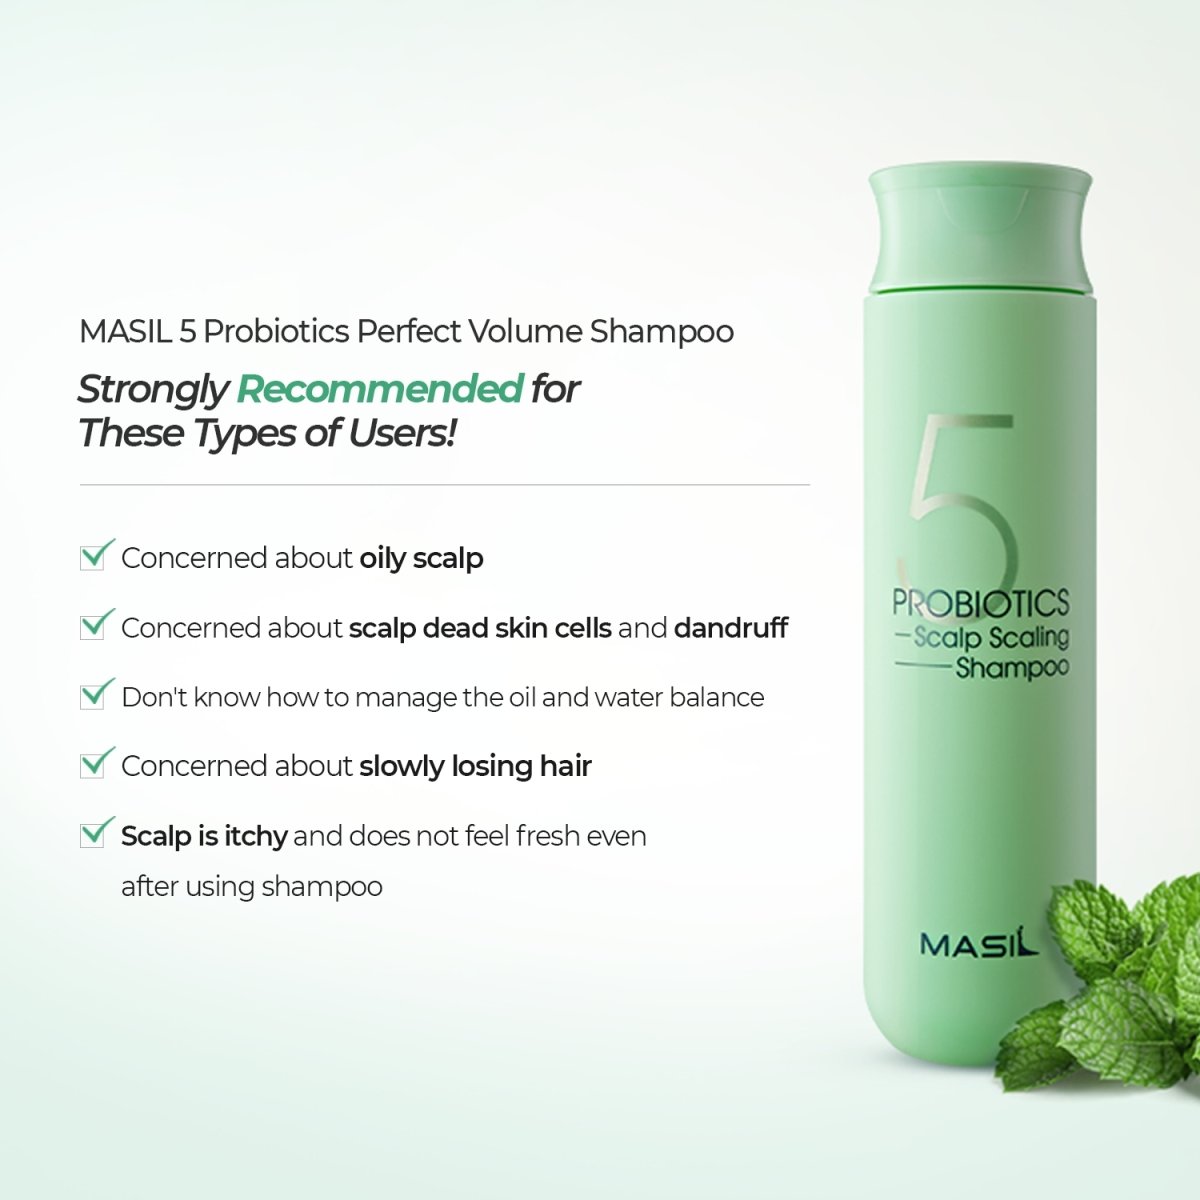 MASIL - Probiotics Scalp Scaling Shampoo - Stellar K-Beauty